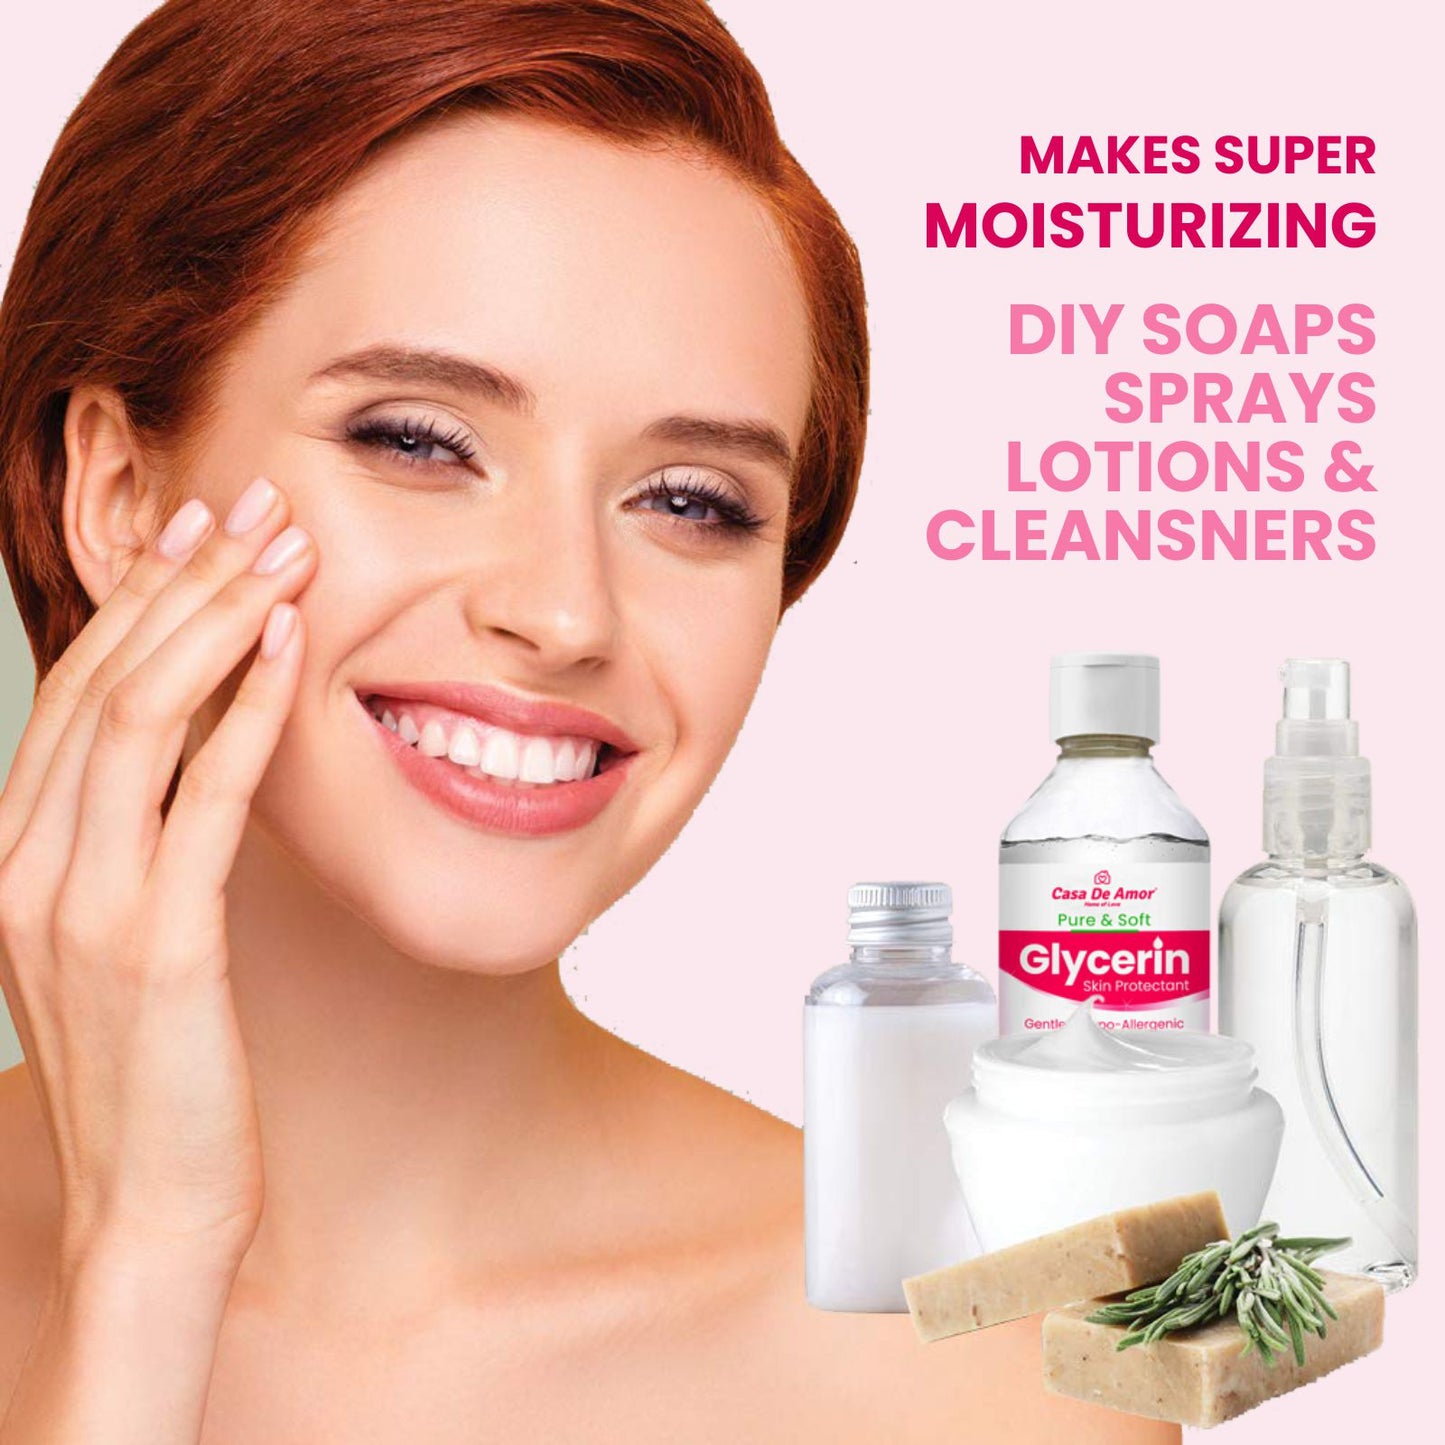 Casa De Amor Glycerin Pure Liquid For Soft & Moisturize Skin, Anti-Aging, Face, Lips, DIY, Soap Making, Beauty & Skin Care